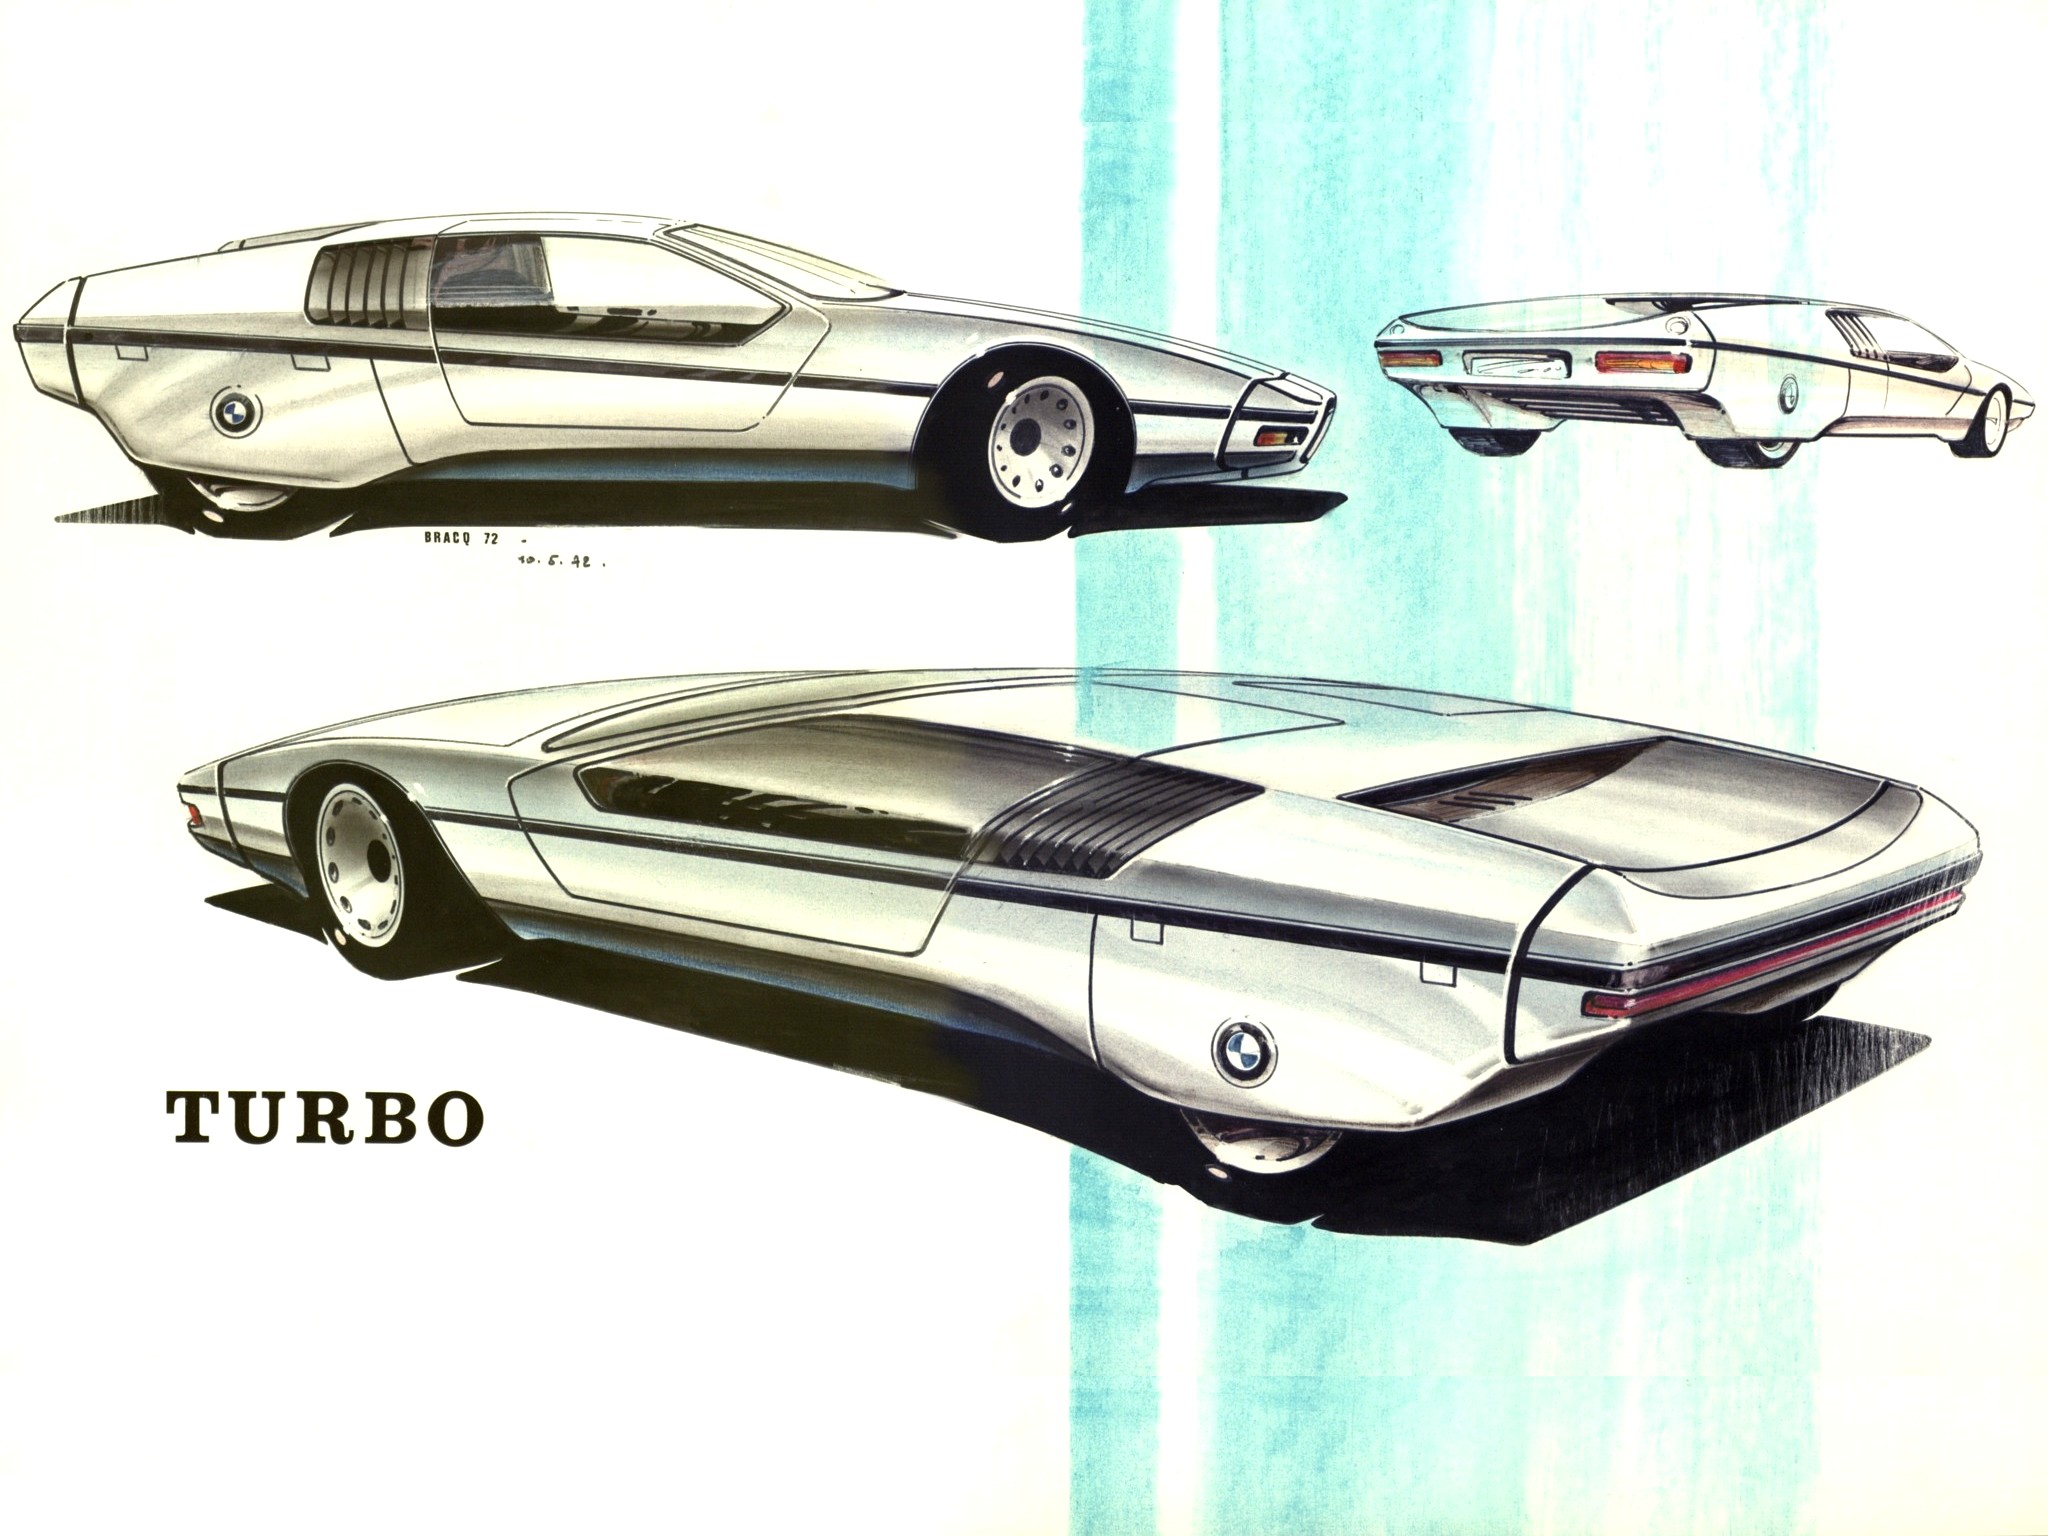 BMW Turbo Concept, 1972 - Design Sketch